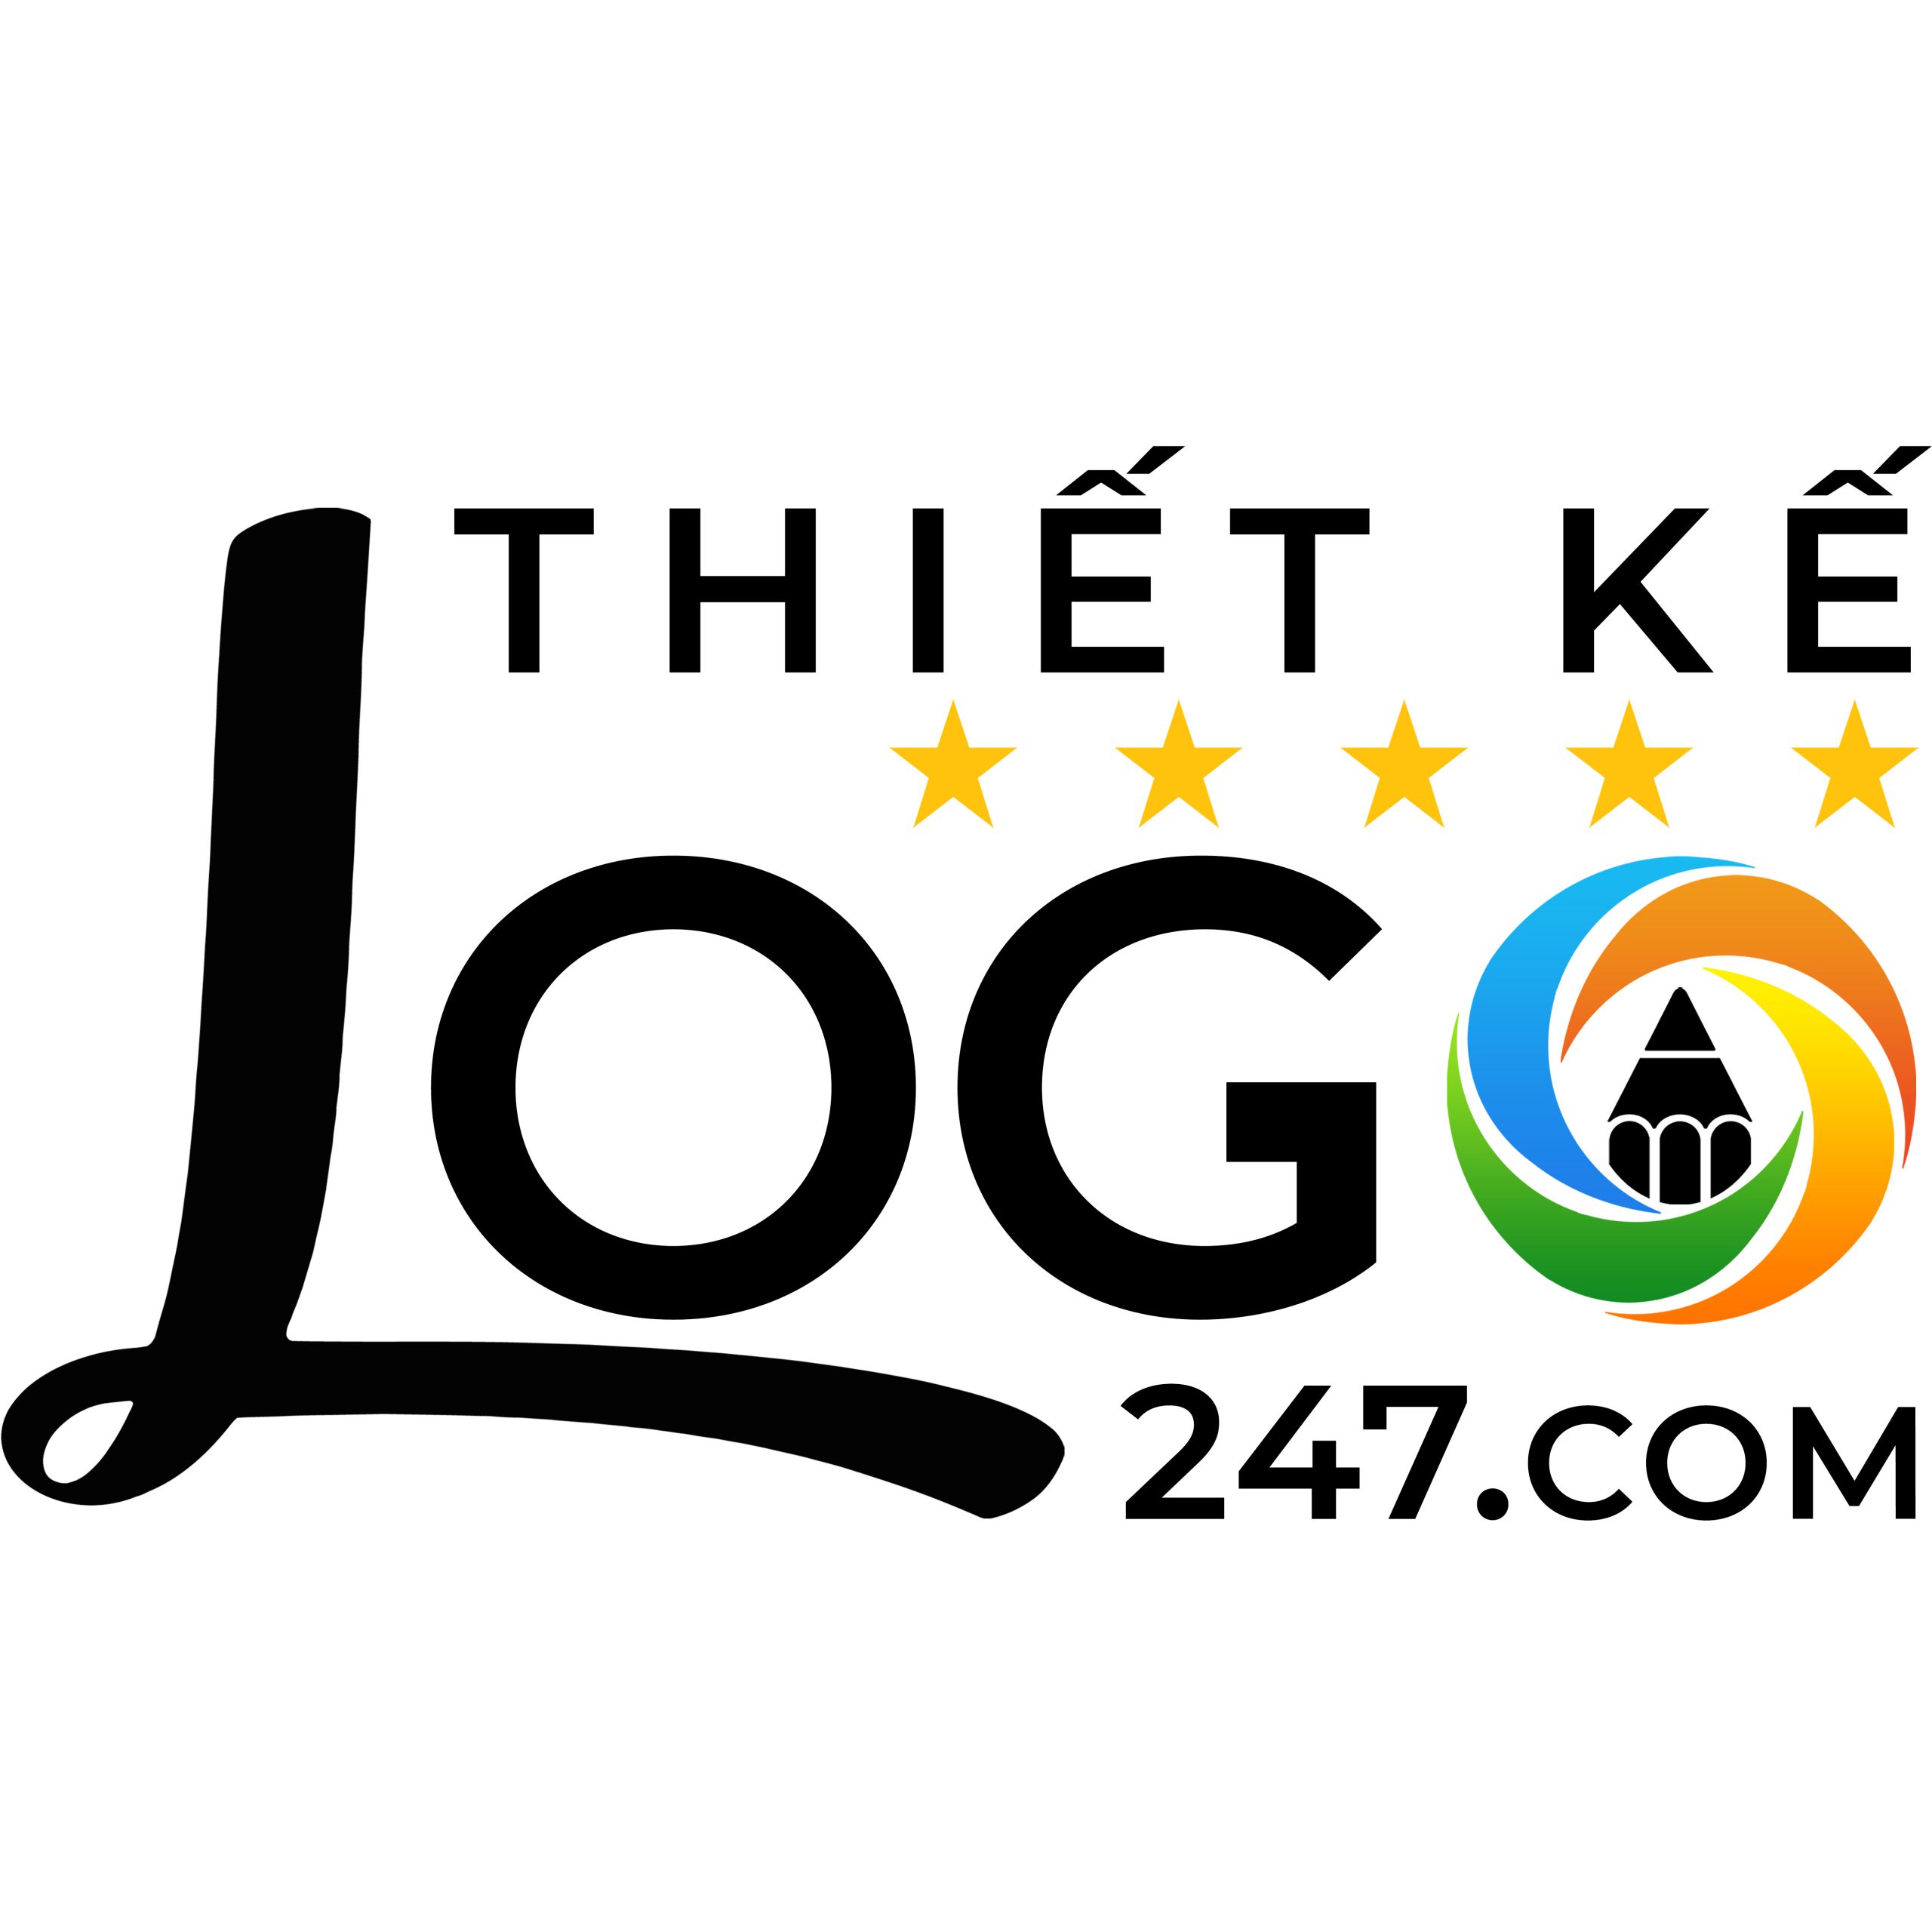 Thiết Kế Logo 247